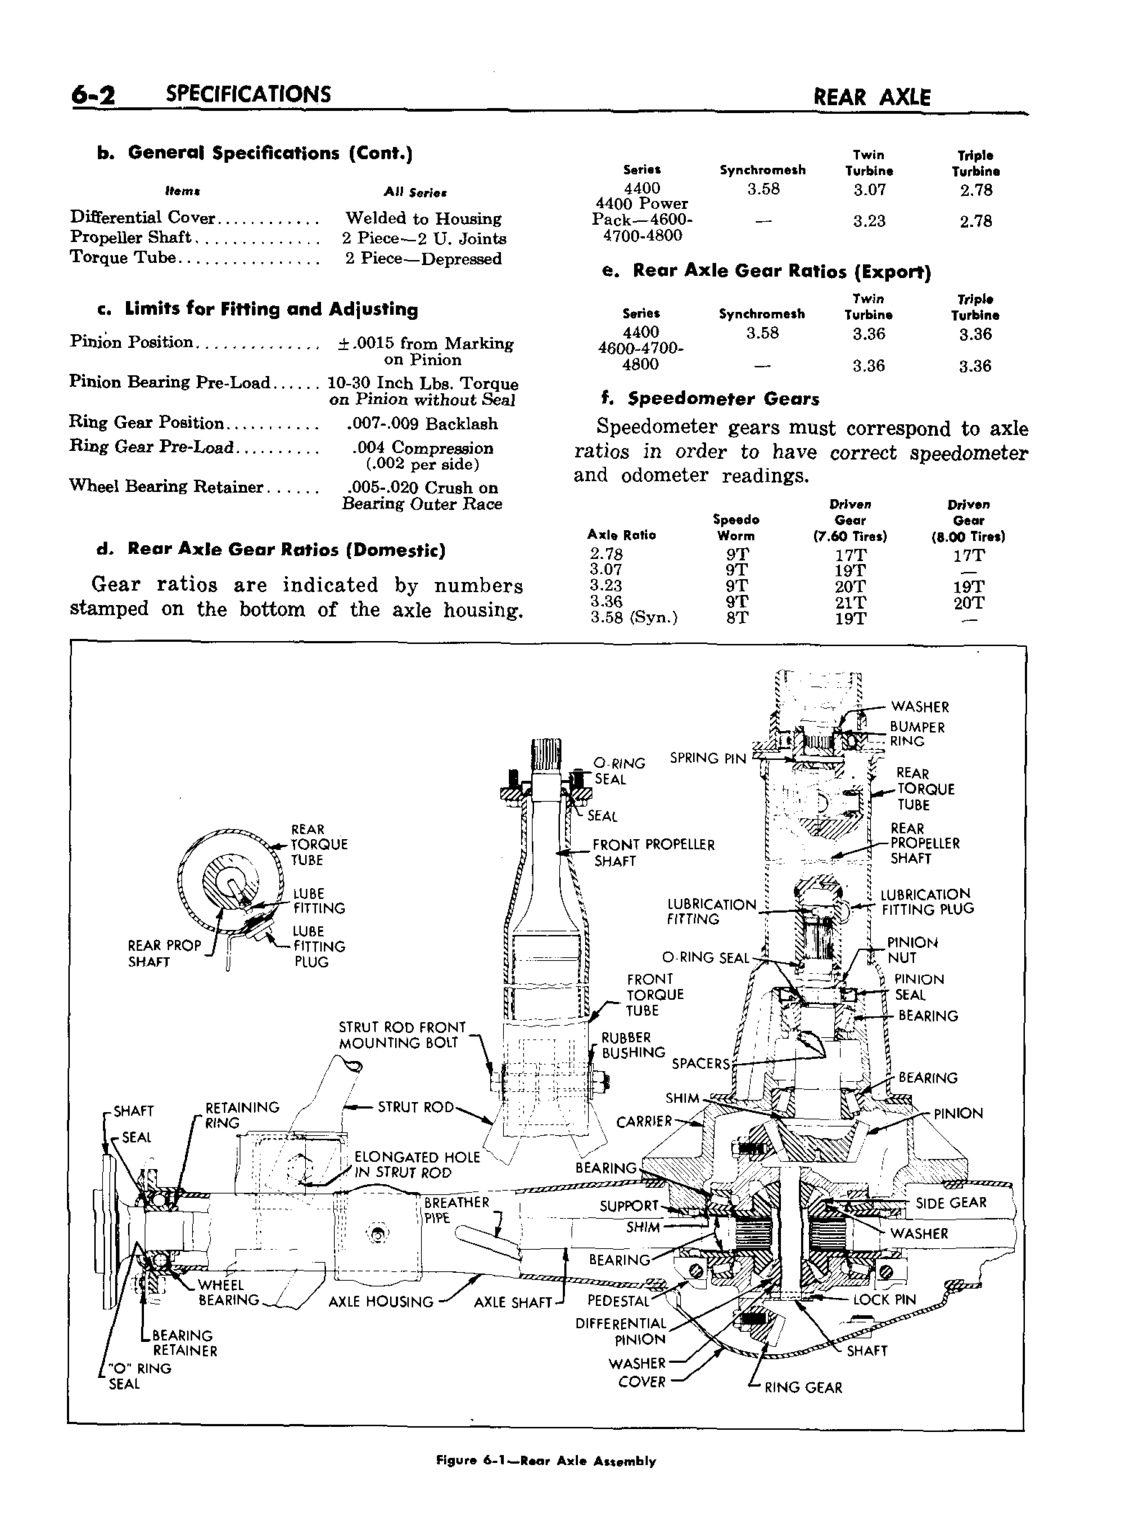 n_07 1959 Buick Shop Manual - Rear Axle-002-002.jpg